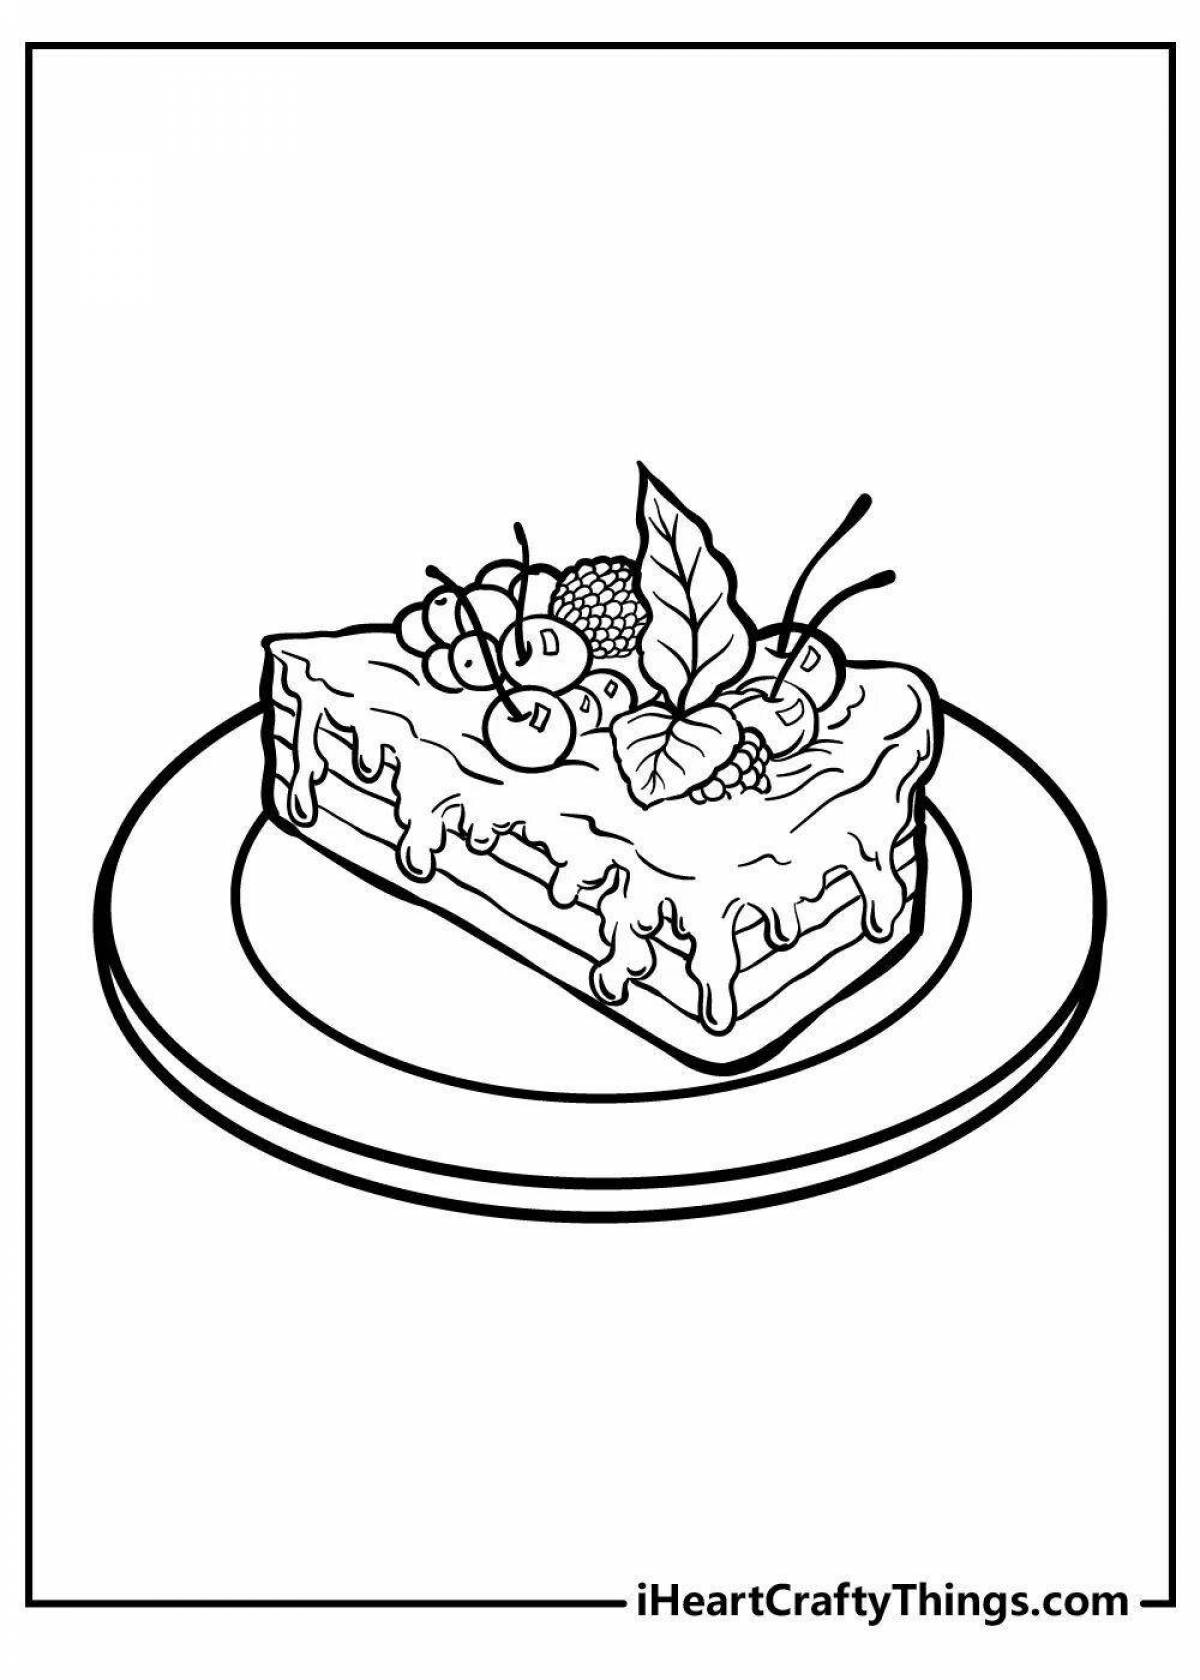 Birthday cake coloring book